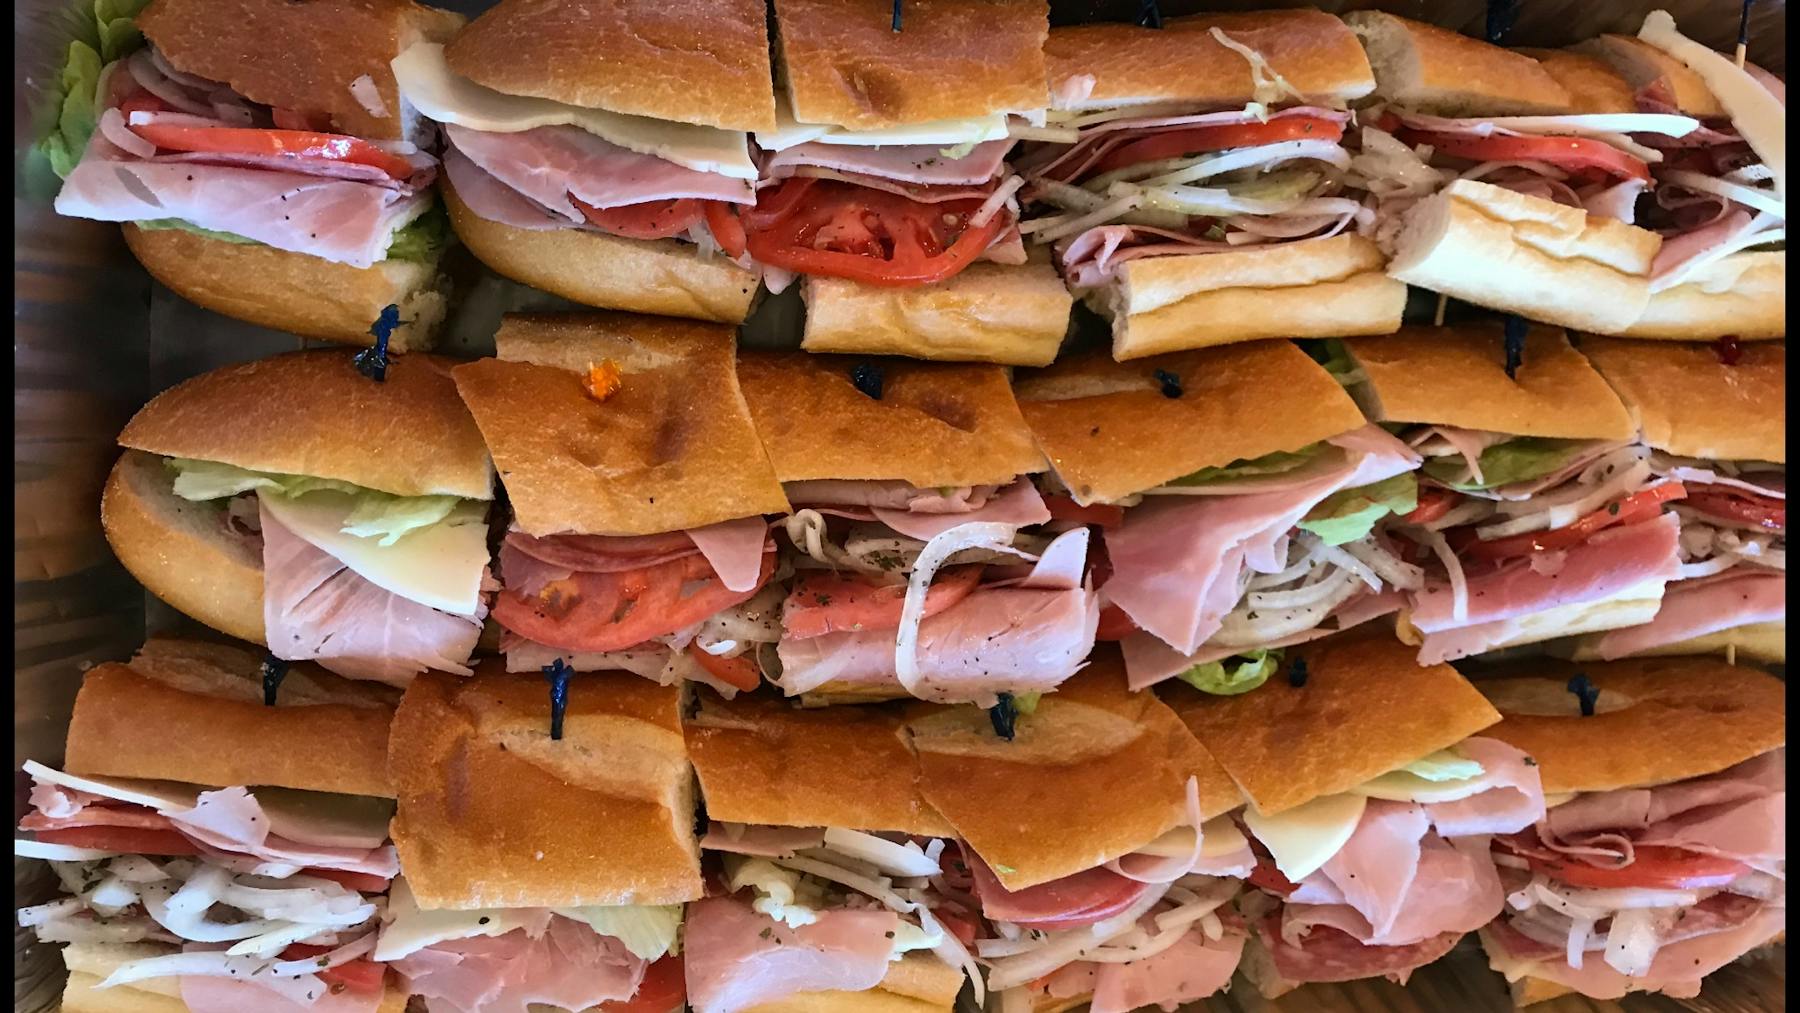 a sandwich cut in half